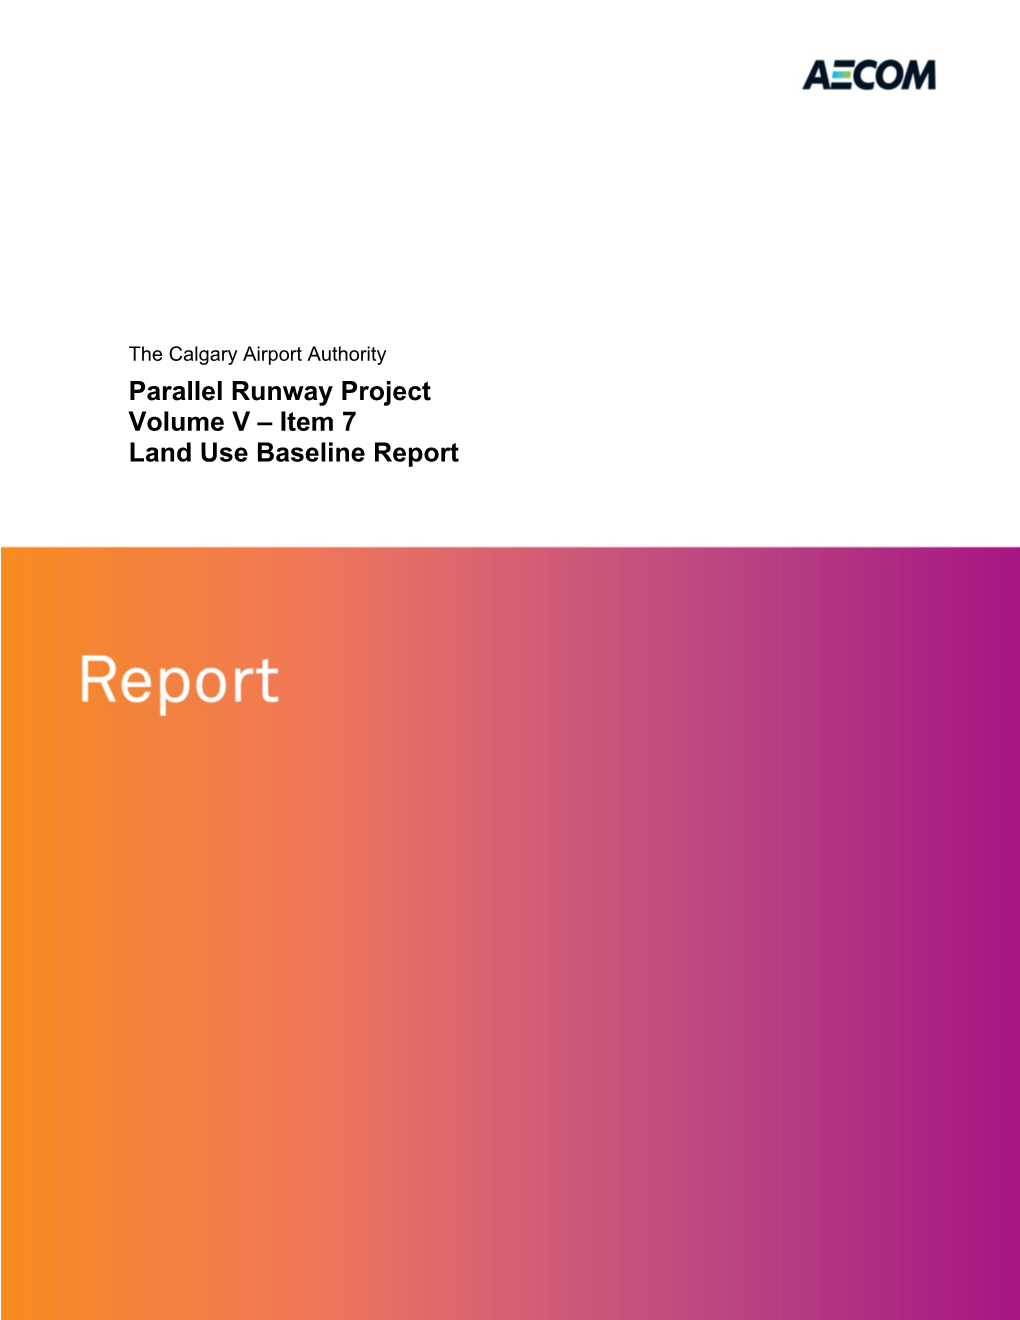 Parallel Runway Project Volume V – Item 7 Land Use Baseline Report